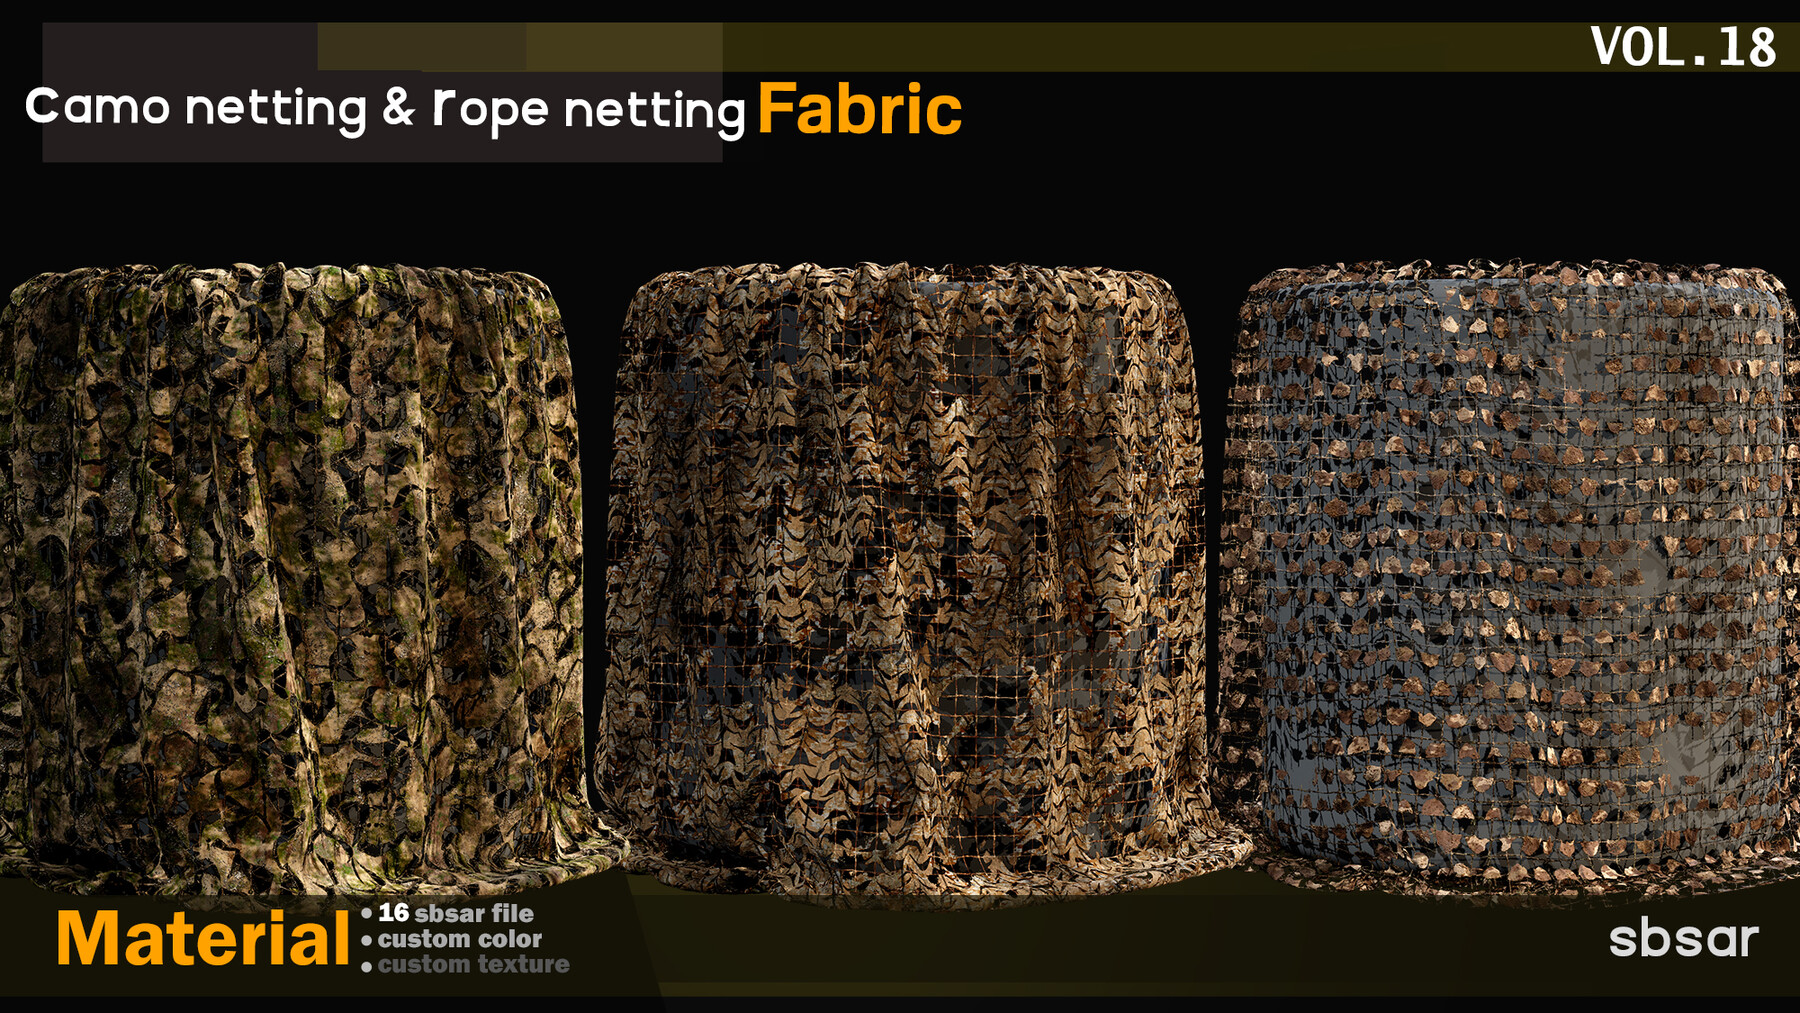 ArtStation - camo netting & rope netting fabric Material -SBSAR -custom  color/ custom fabric -VOL 18